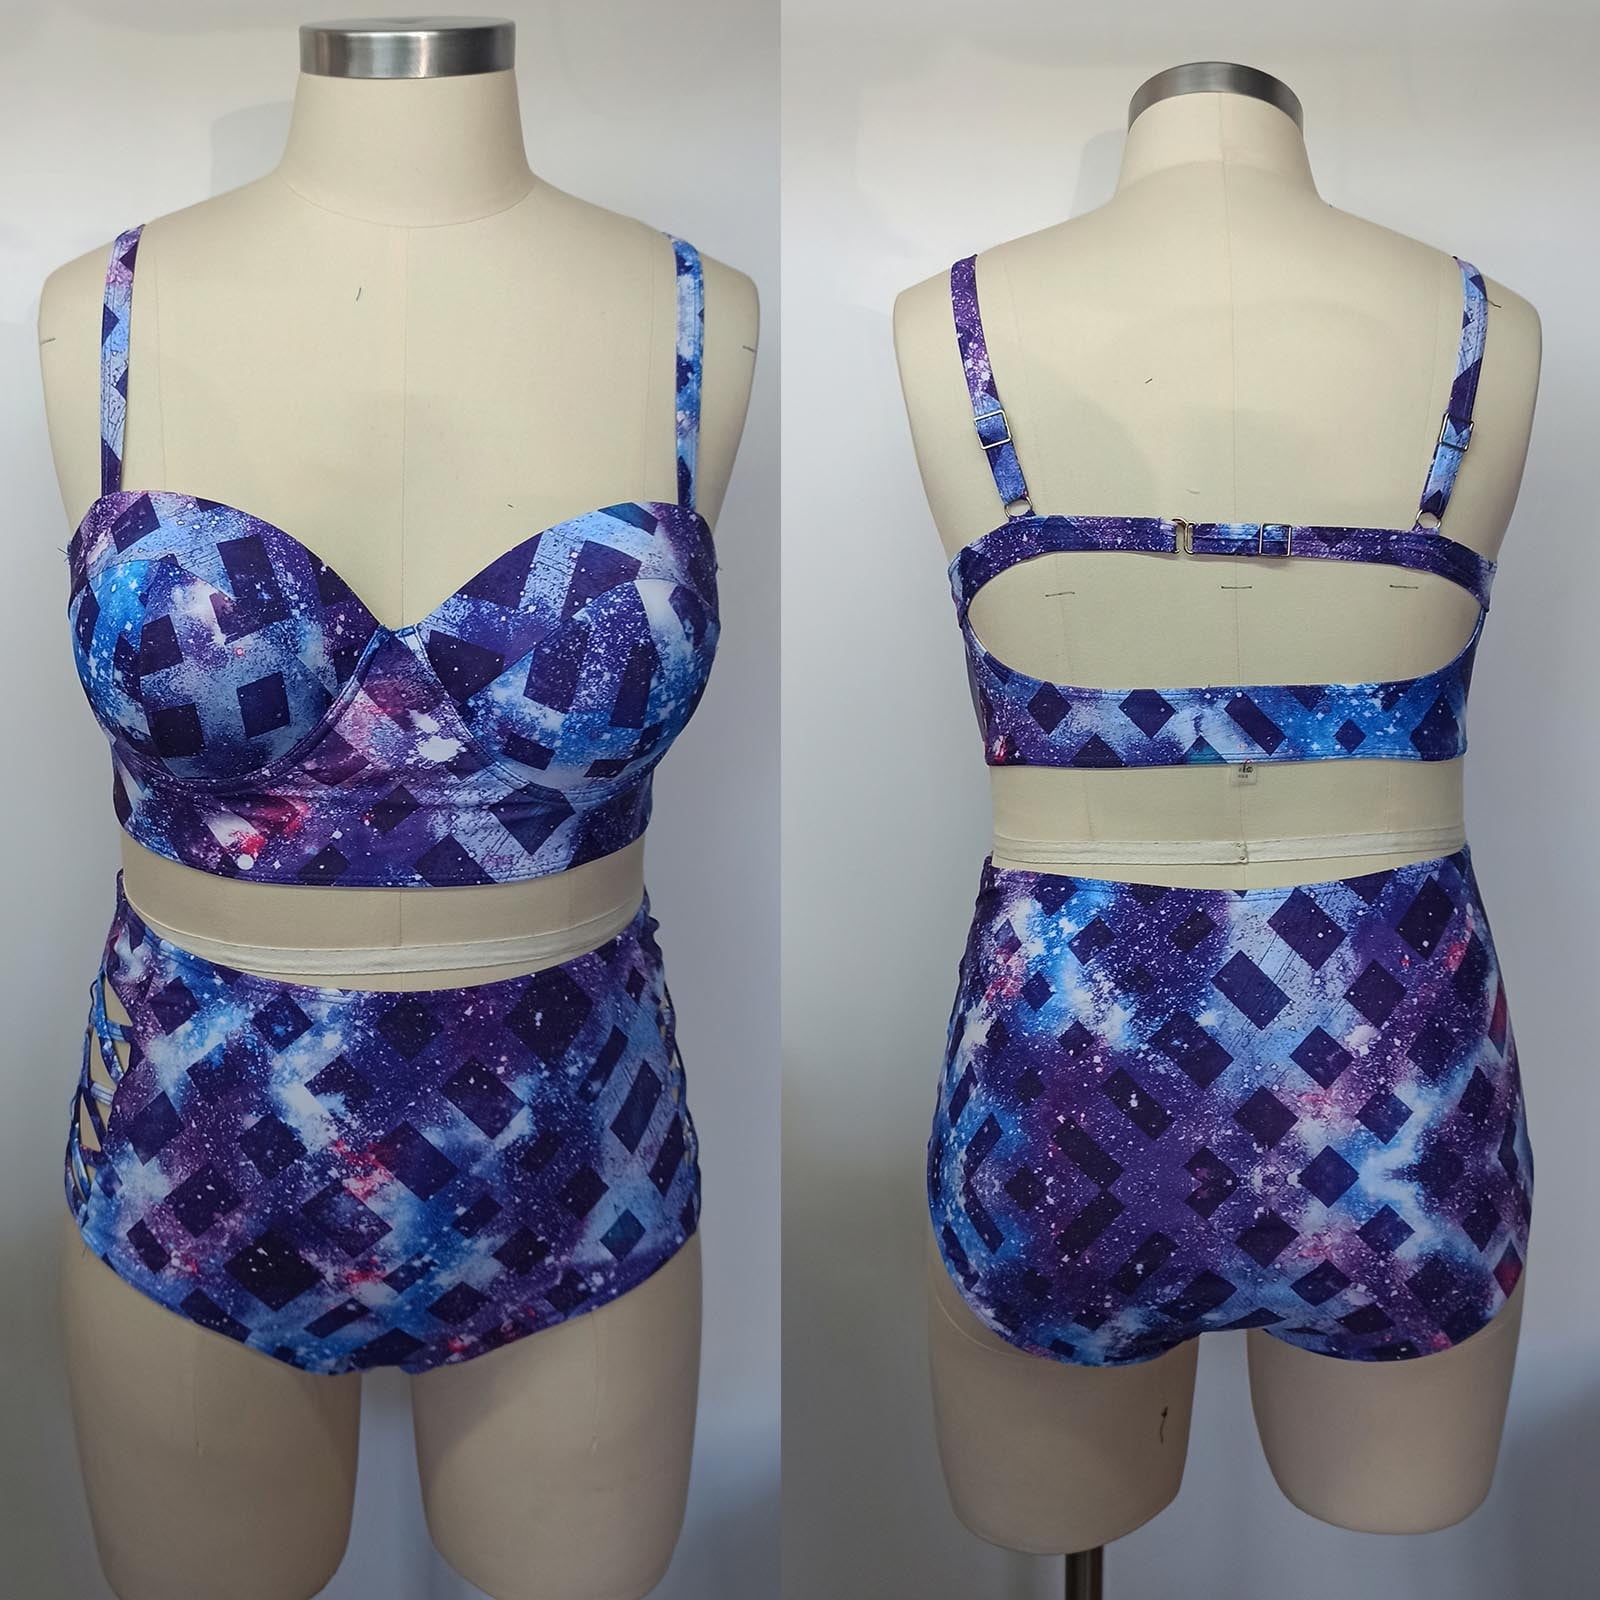 ZQGJB Plus Size Swimsuit for Women Galaxy Print High Waist Tummy